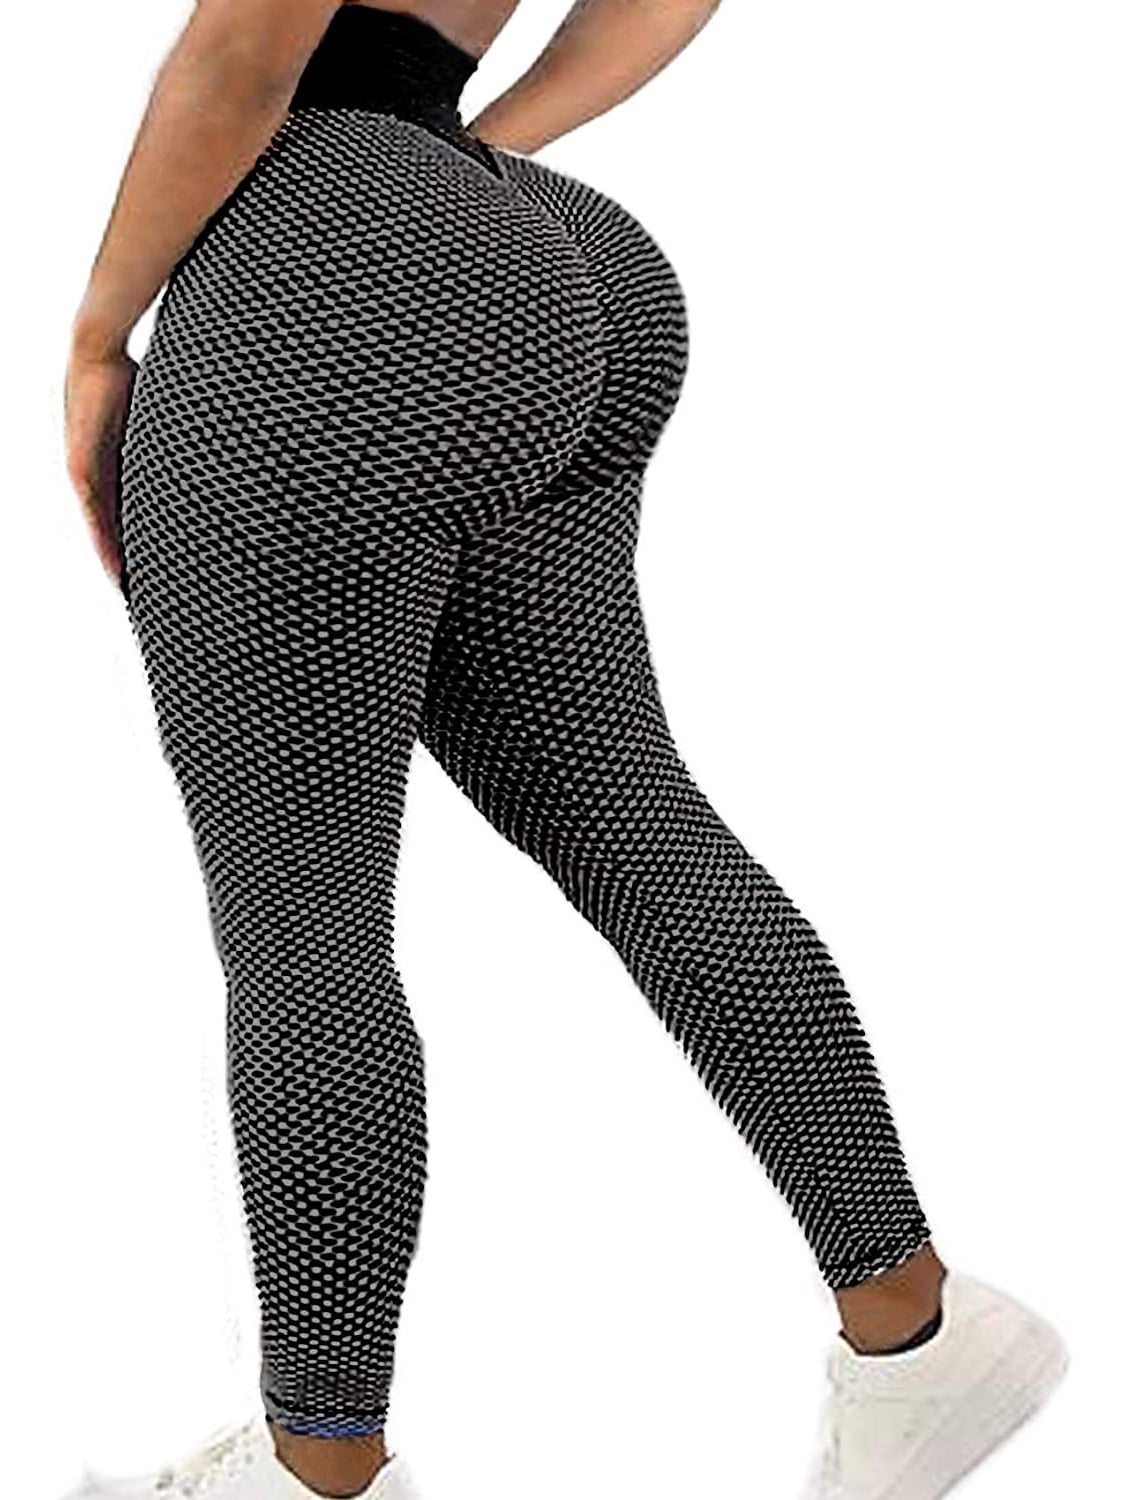 VASLANDA Women's High Waist Honeycomb Textured Yoga Pants Tummy